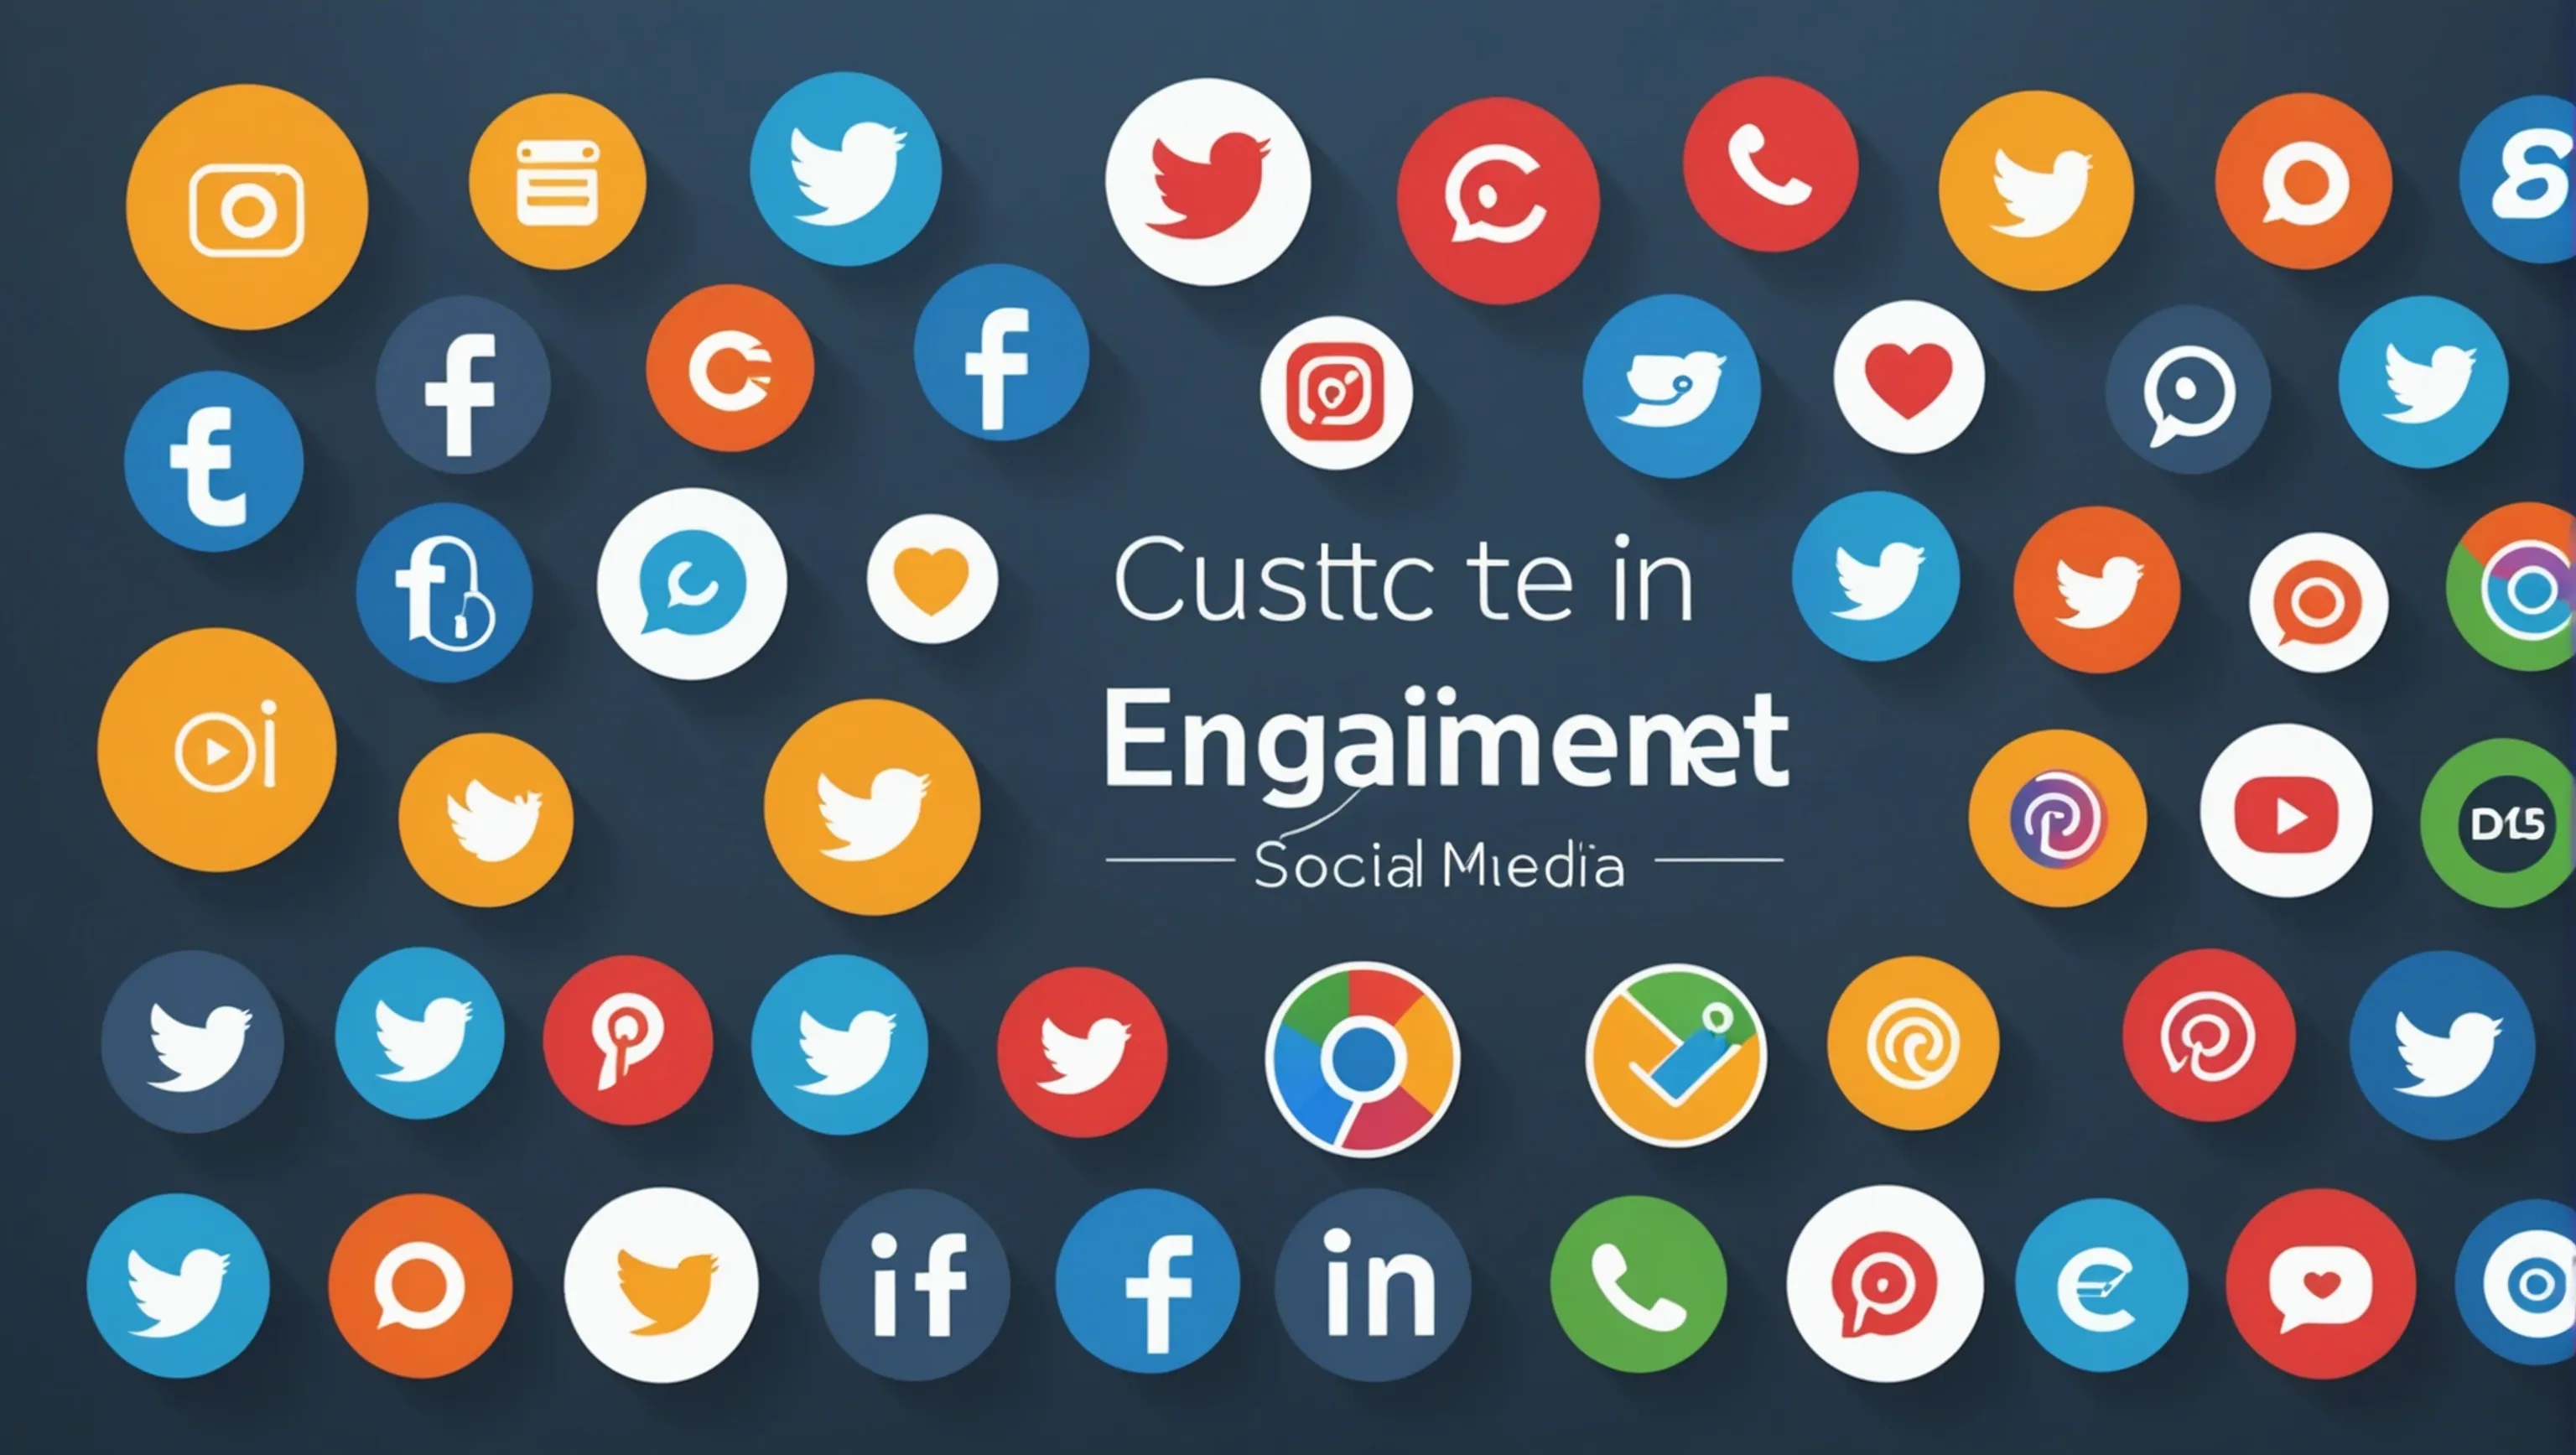 Engagement on social media